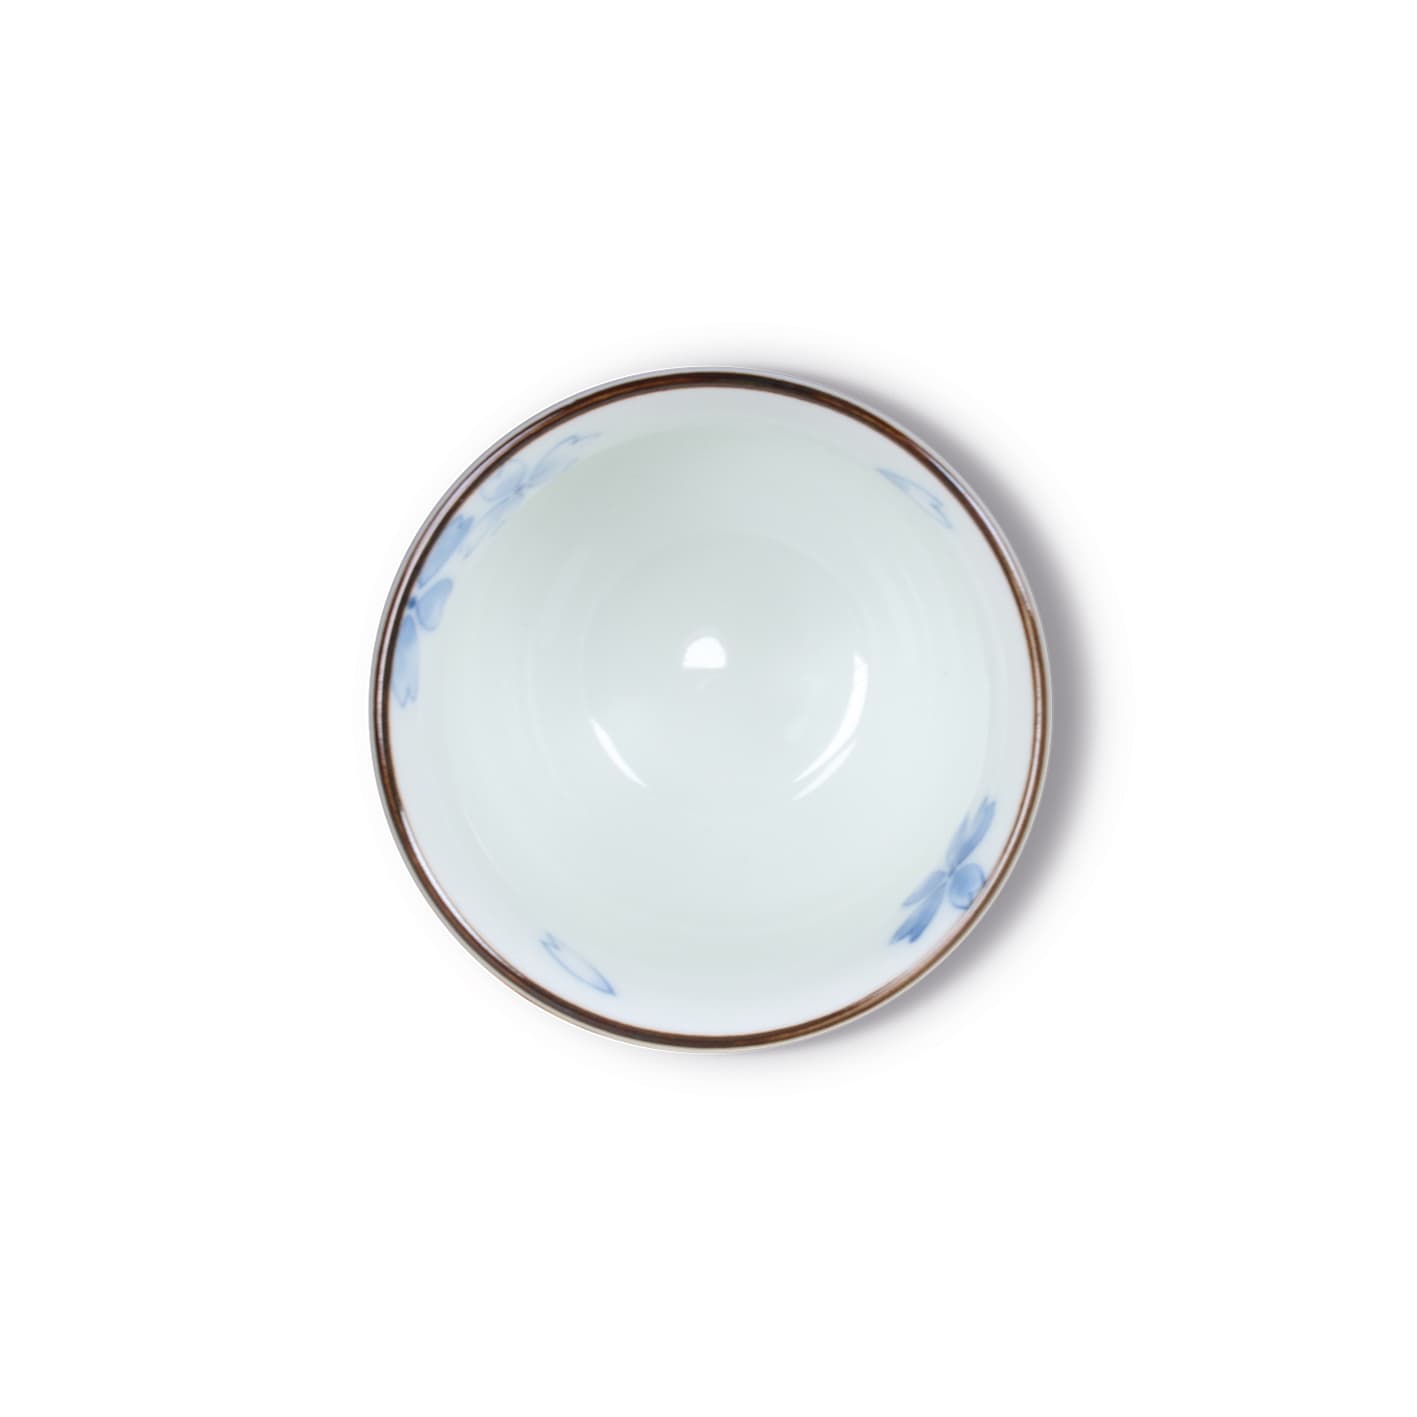 Original Japanese teacup with flower pattern (170ml)